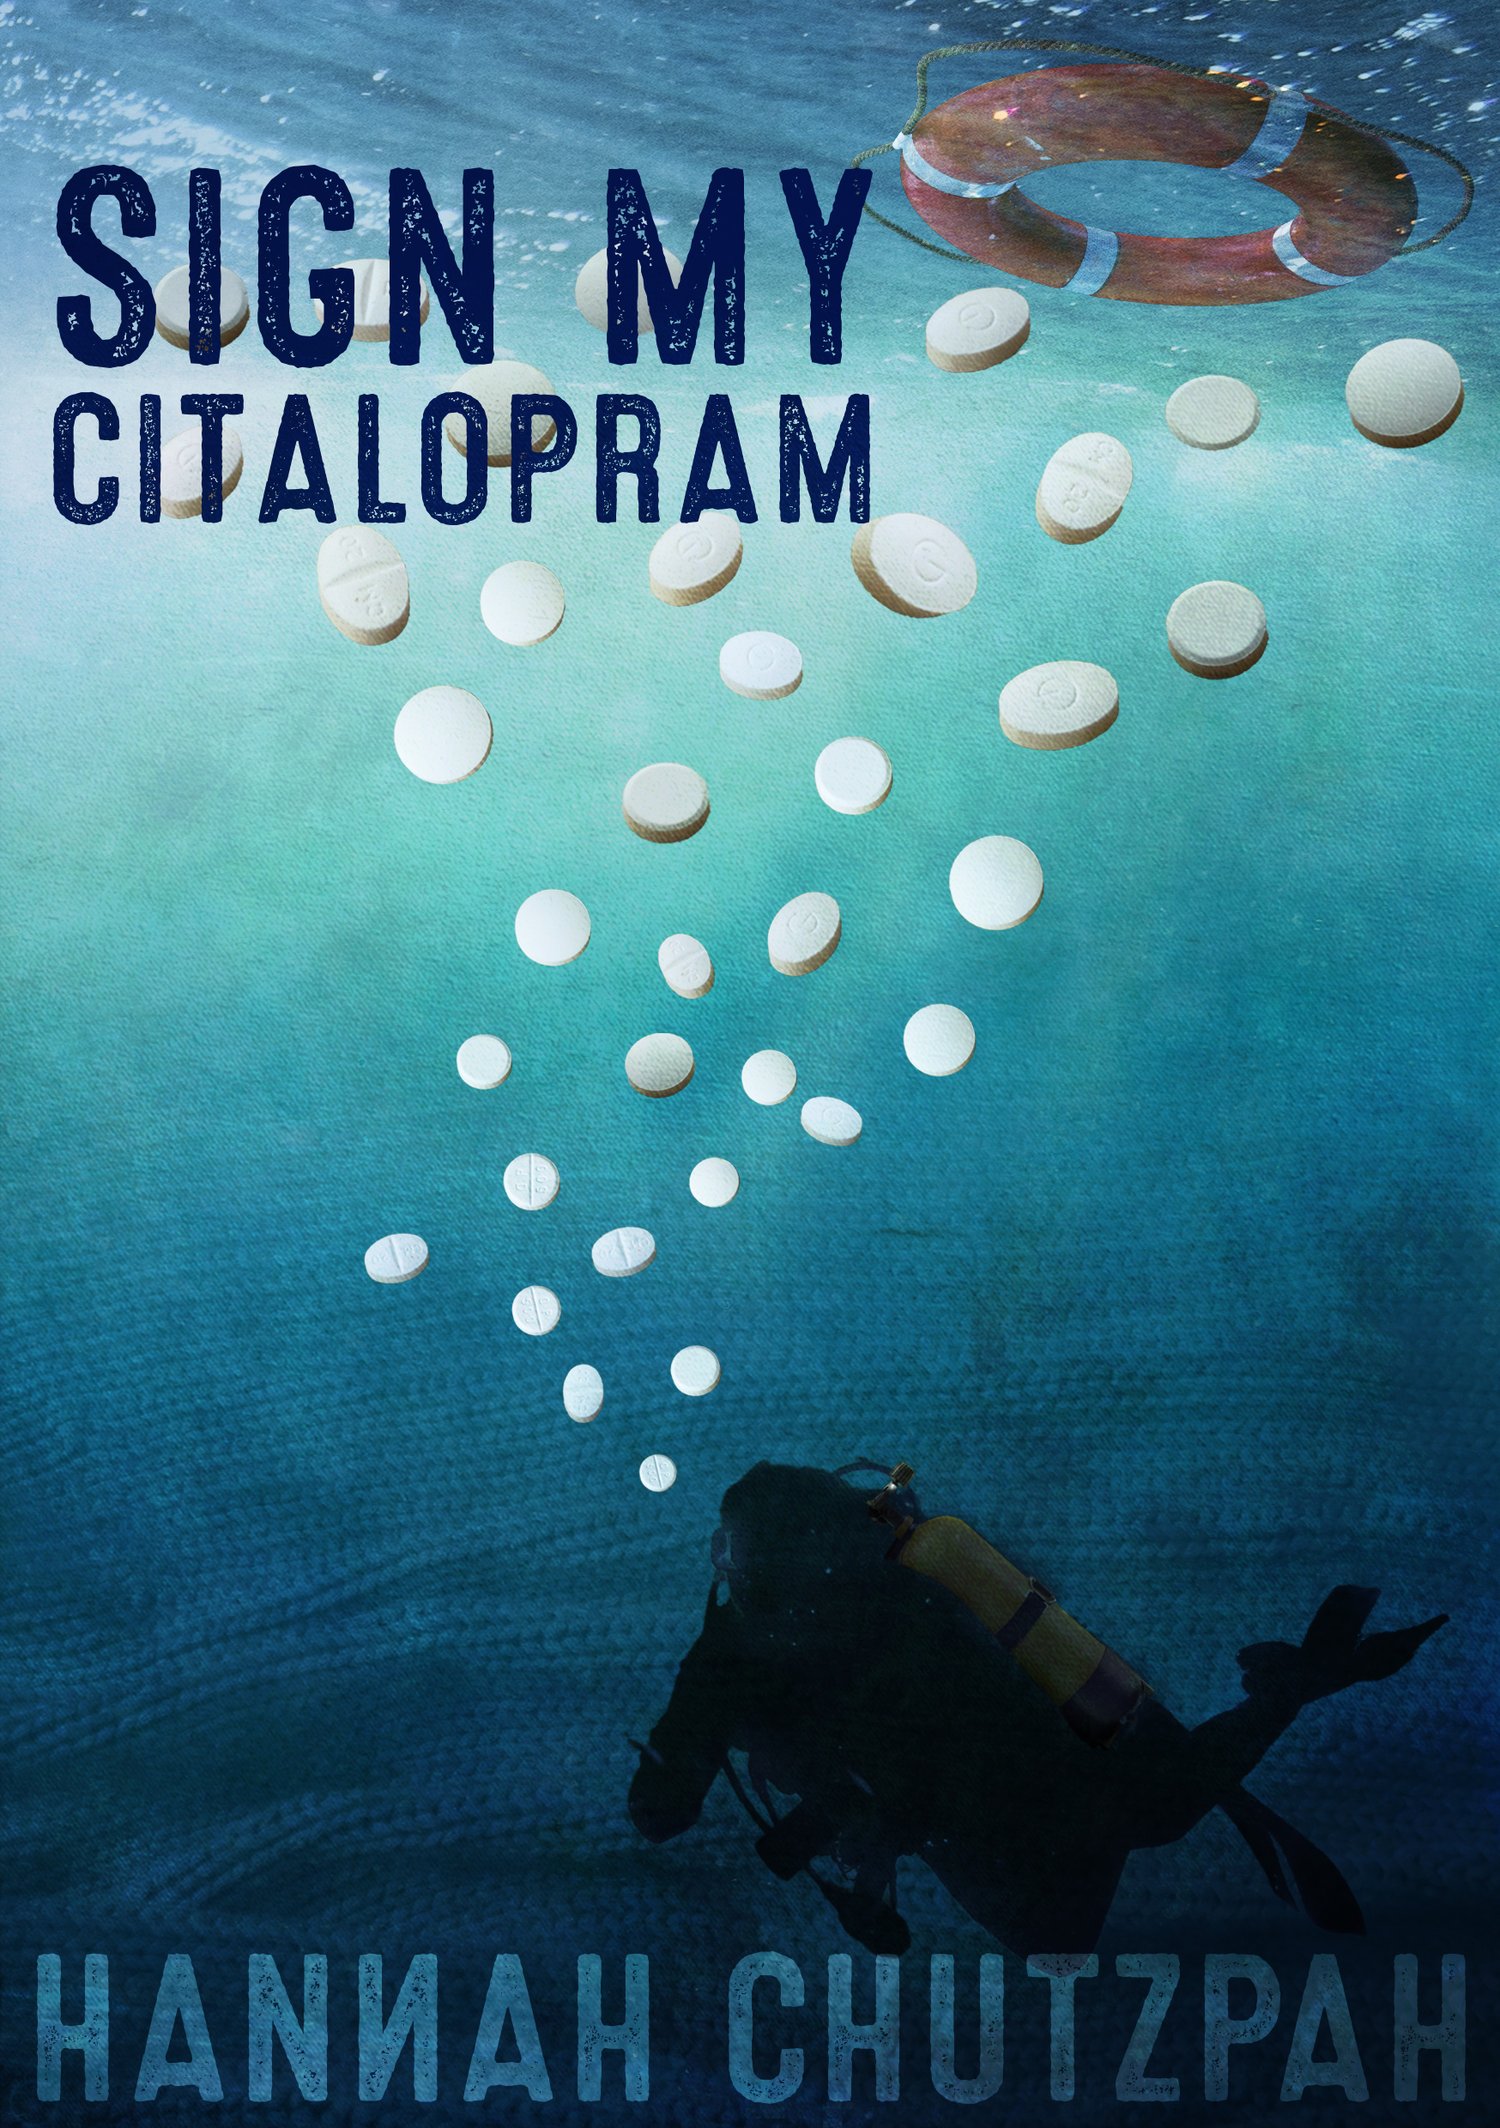 Sign My Citalopram, 2016